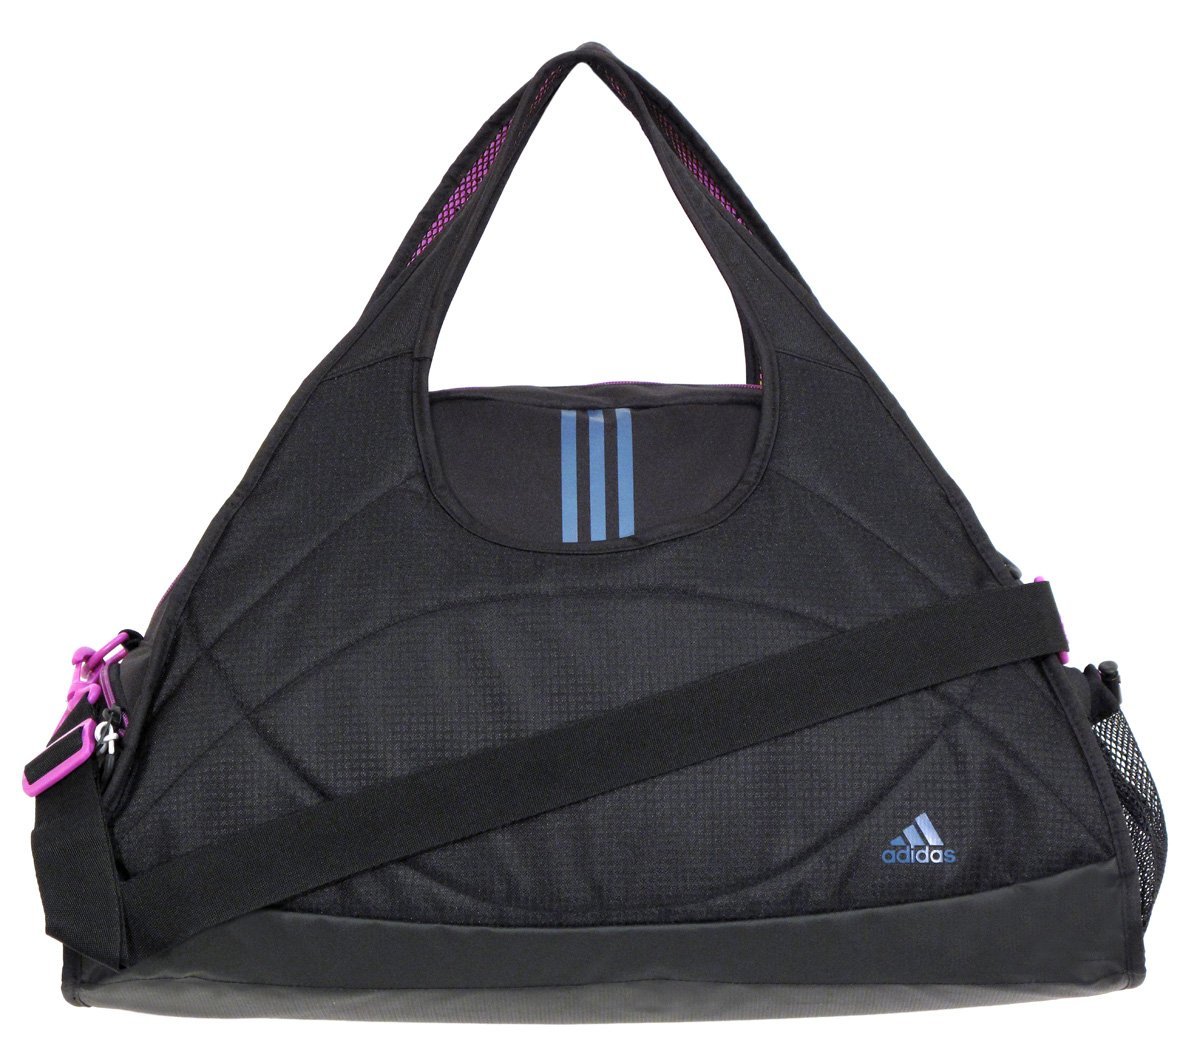 Adidas Ultimate Club Bag